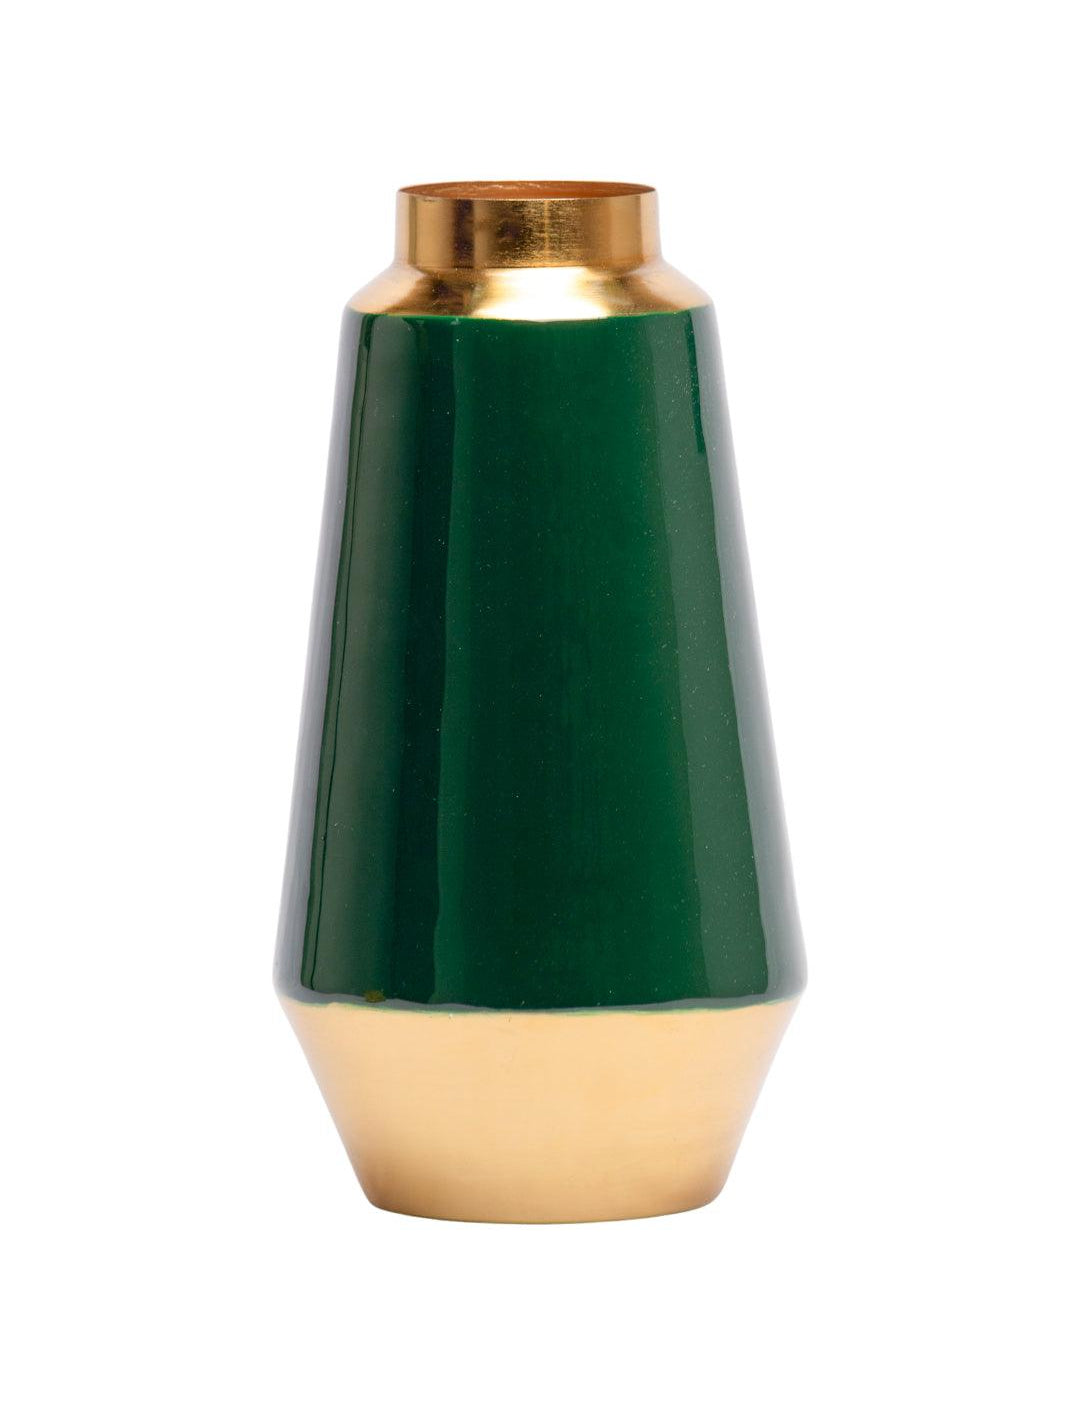 Decorative Enamel Vase - Golden & Green - MARKET 99